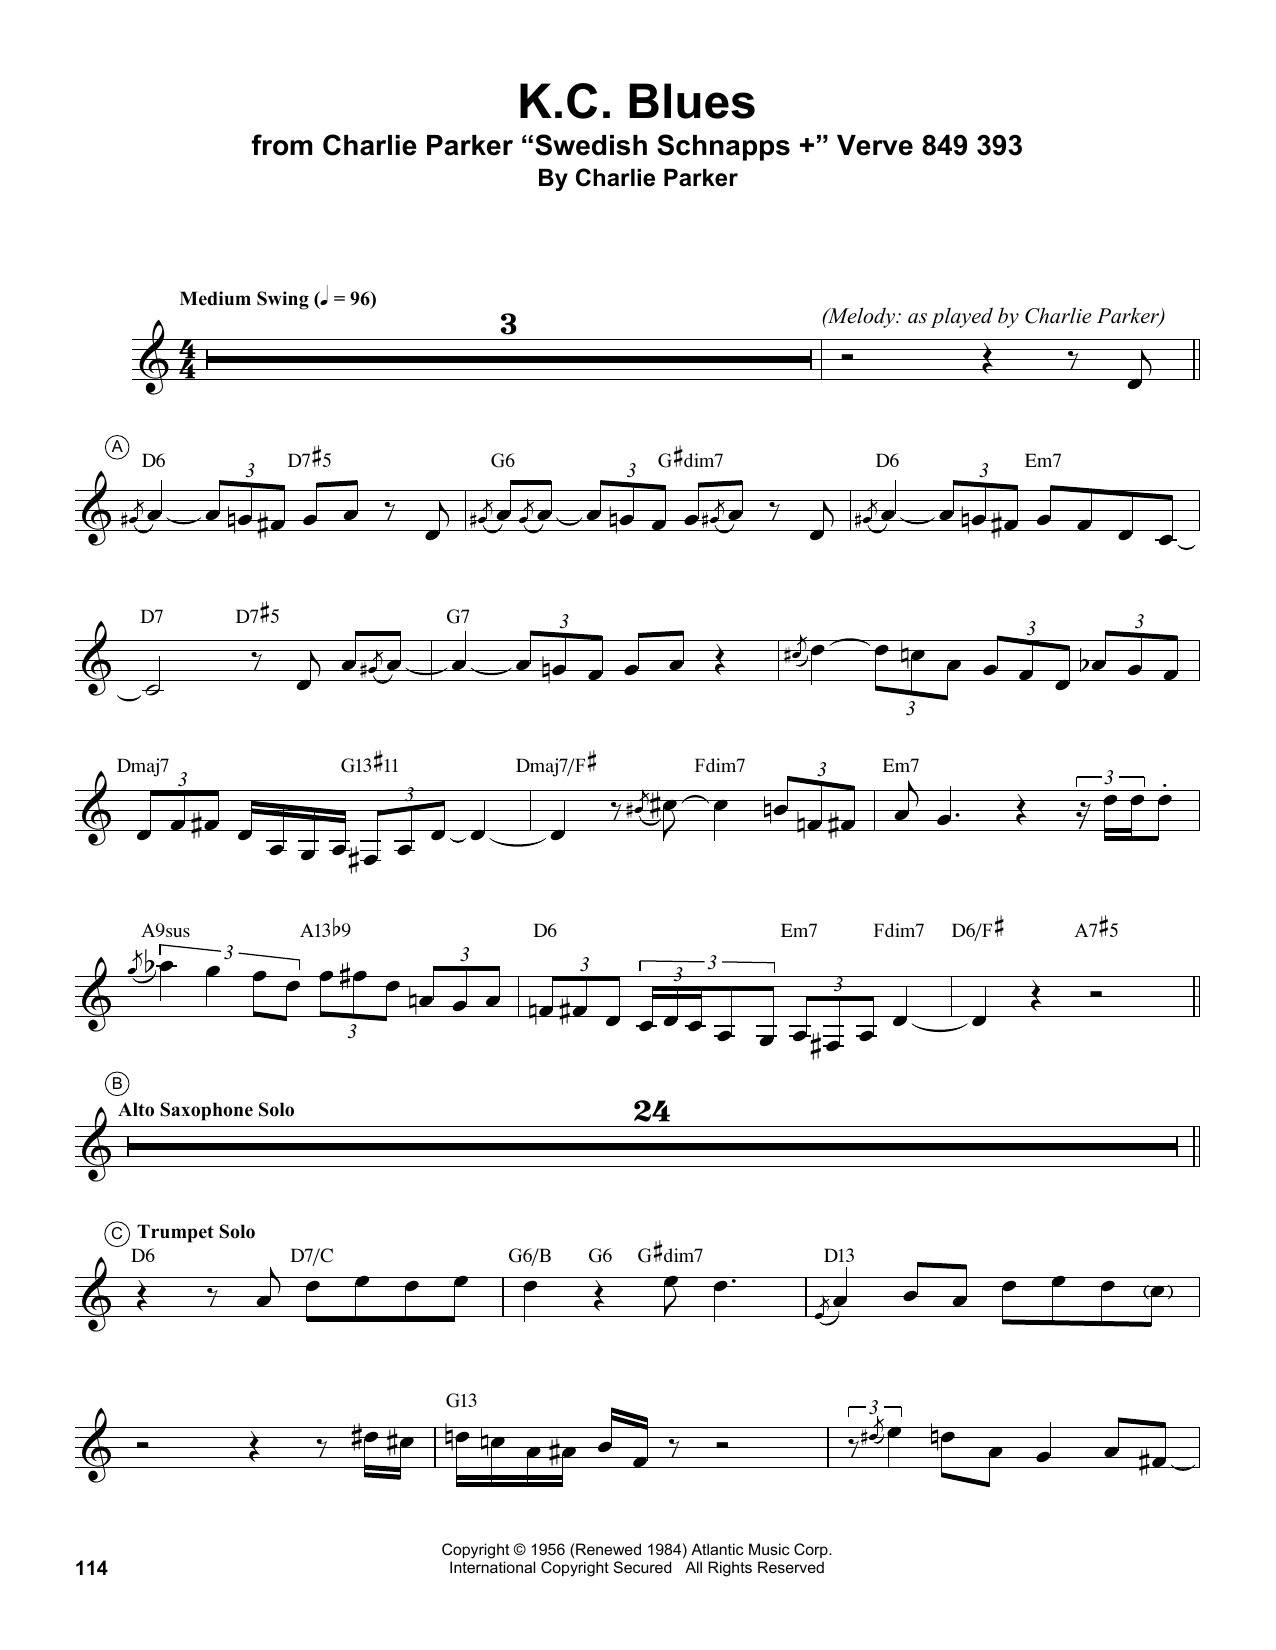 Miles Davis K.C. Blues Sheet Music Notes & Chords for Trumpet Transcription - Download or Print PDF